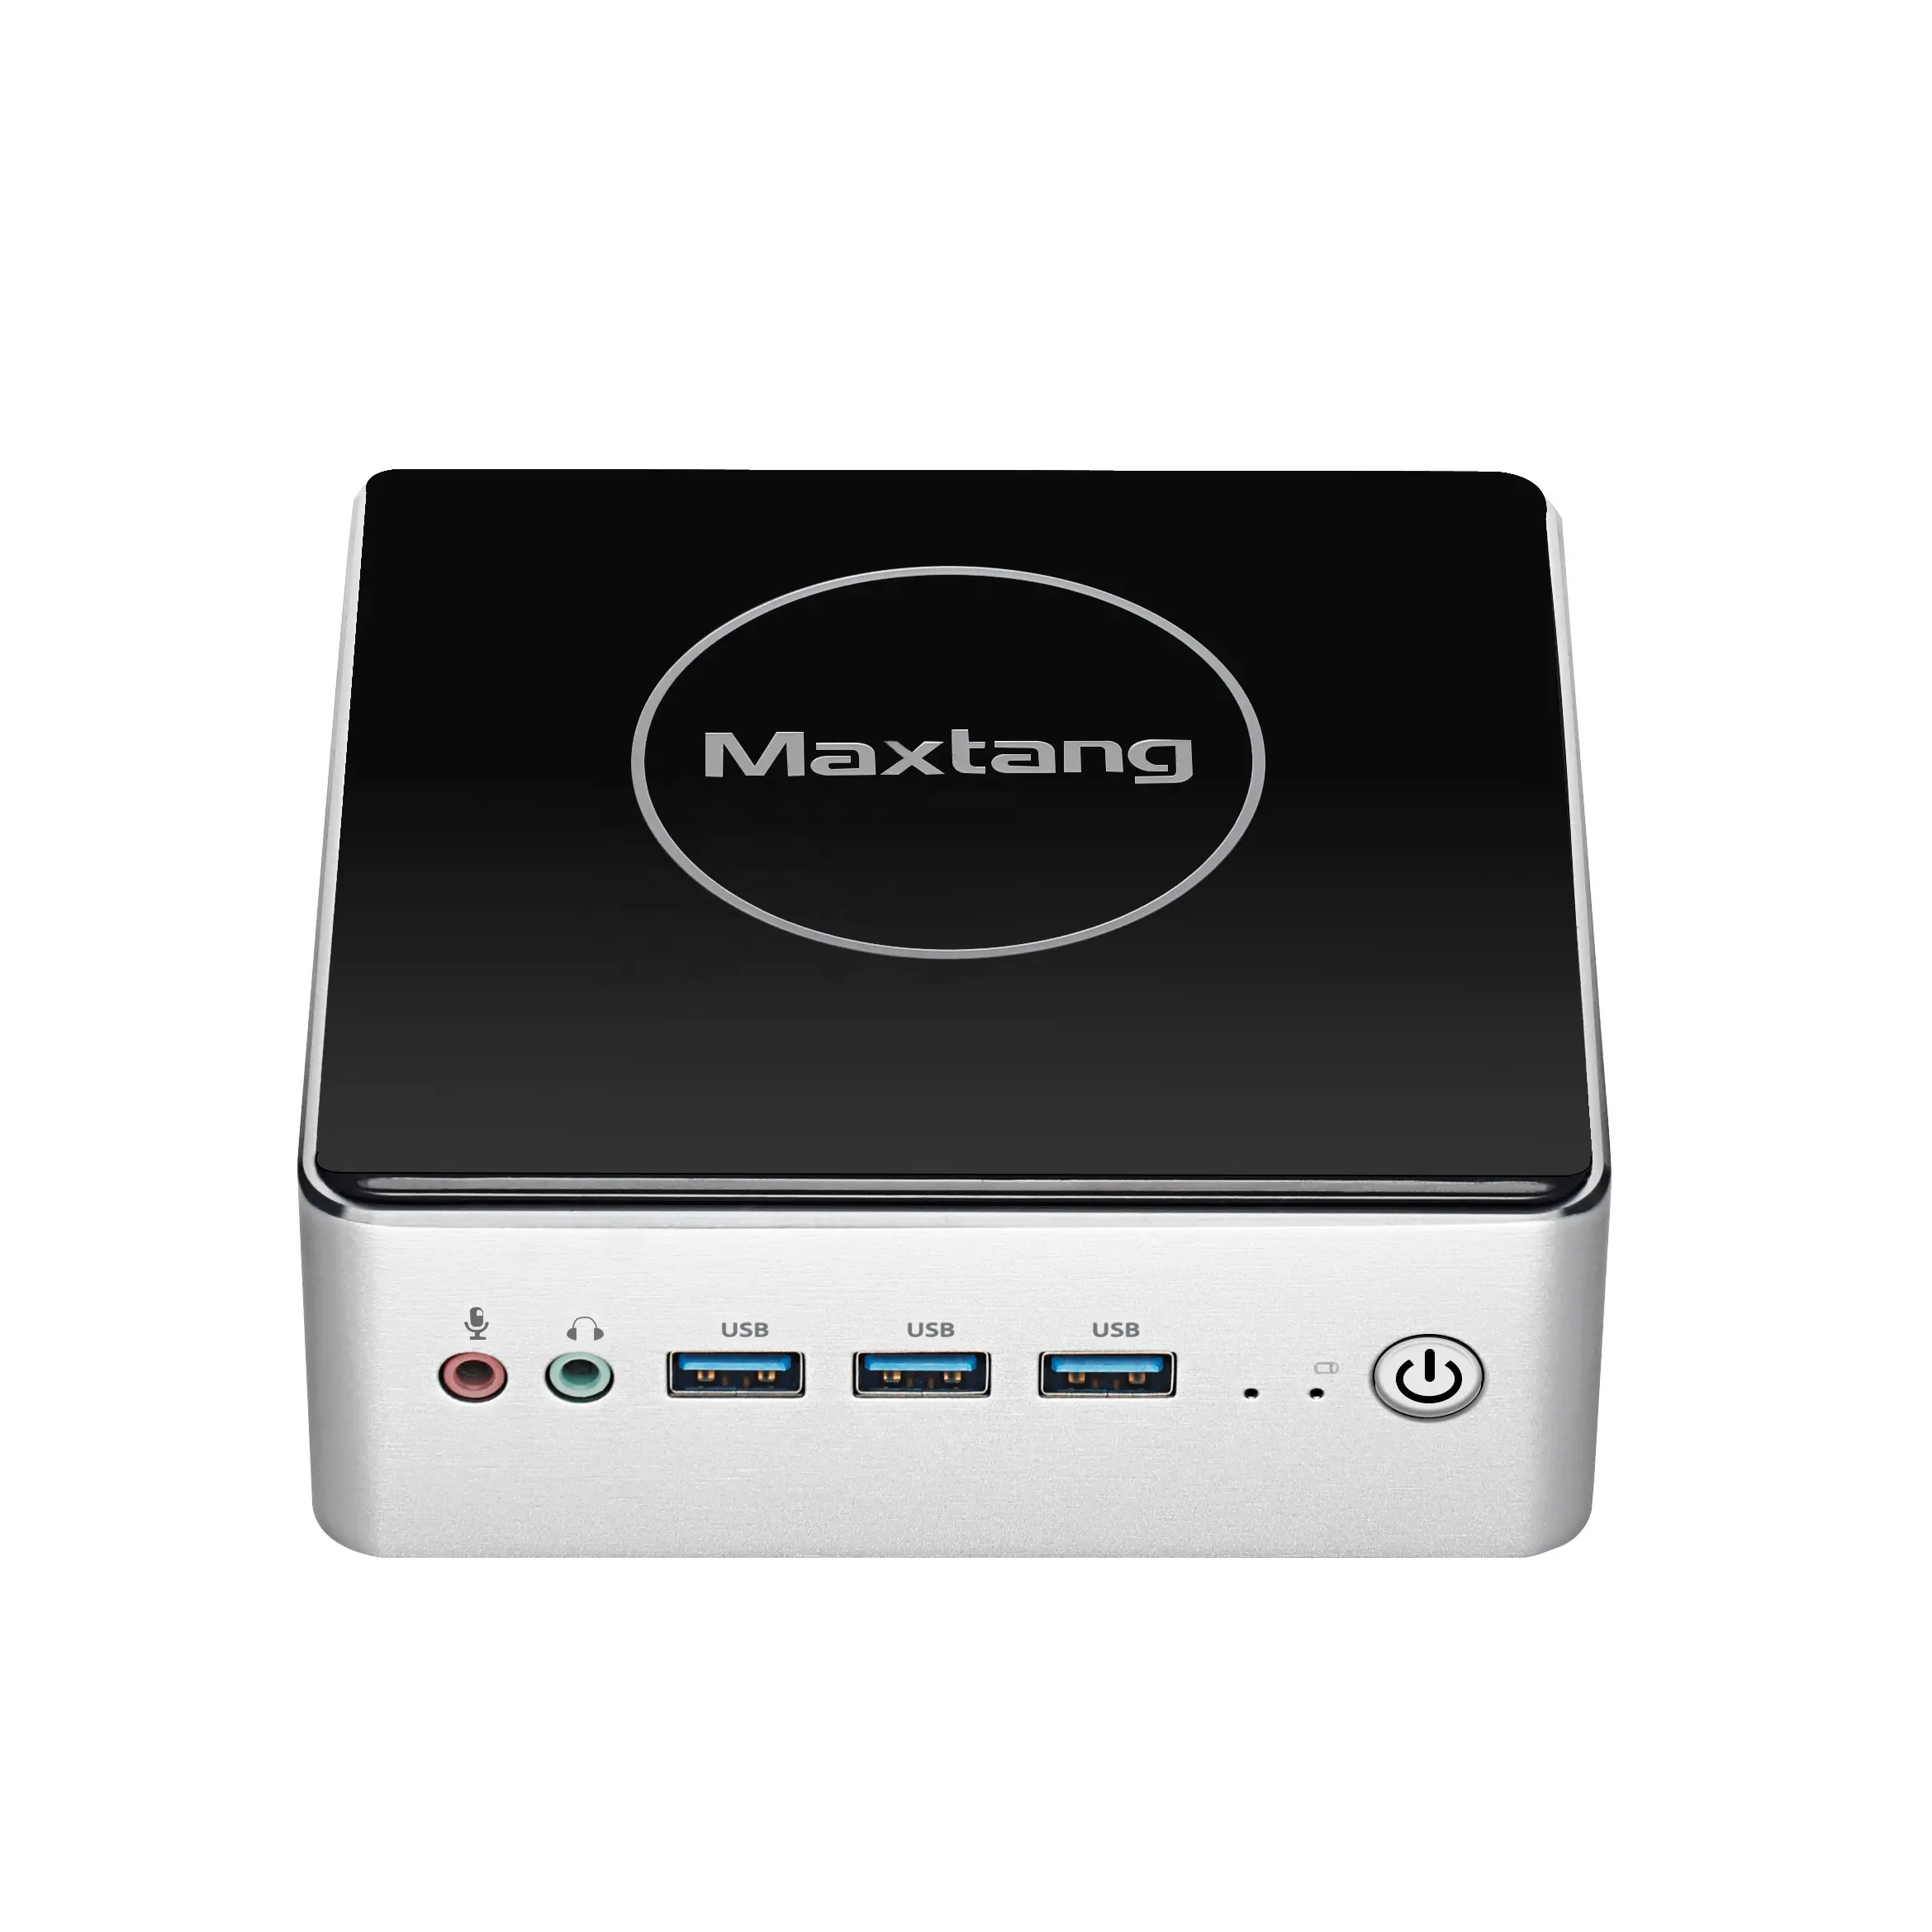 Maxtang INTEL Haswell y Broadwell NUC i5 a bordo cpu mini pc con 3 USB3.0 2 USB2.0 2HDMI 1LAN ganar 10 LINUX